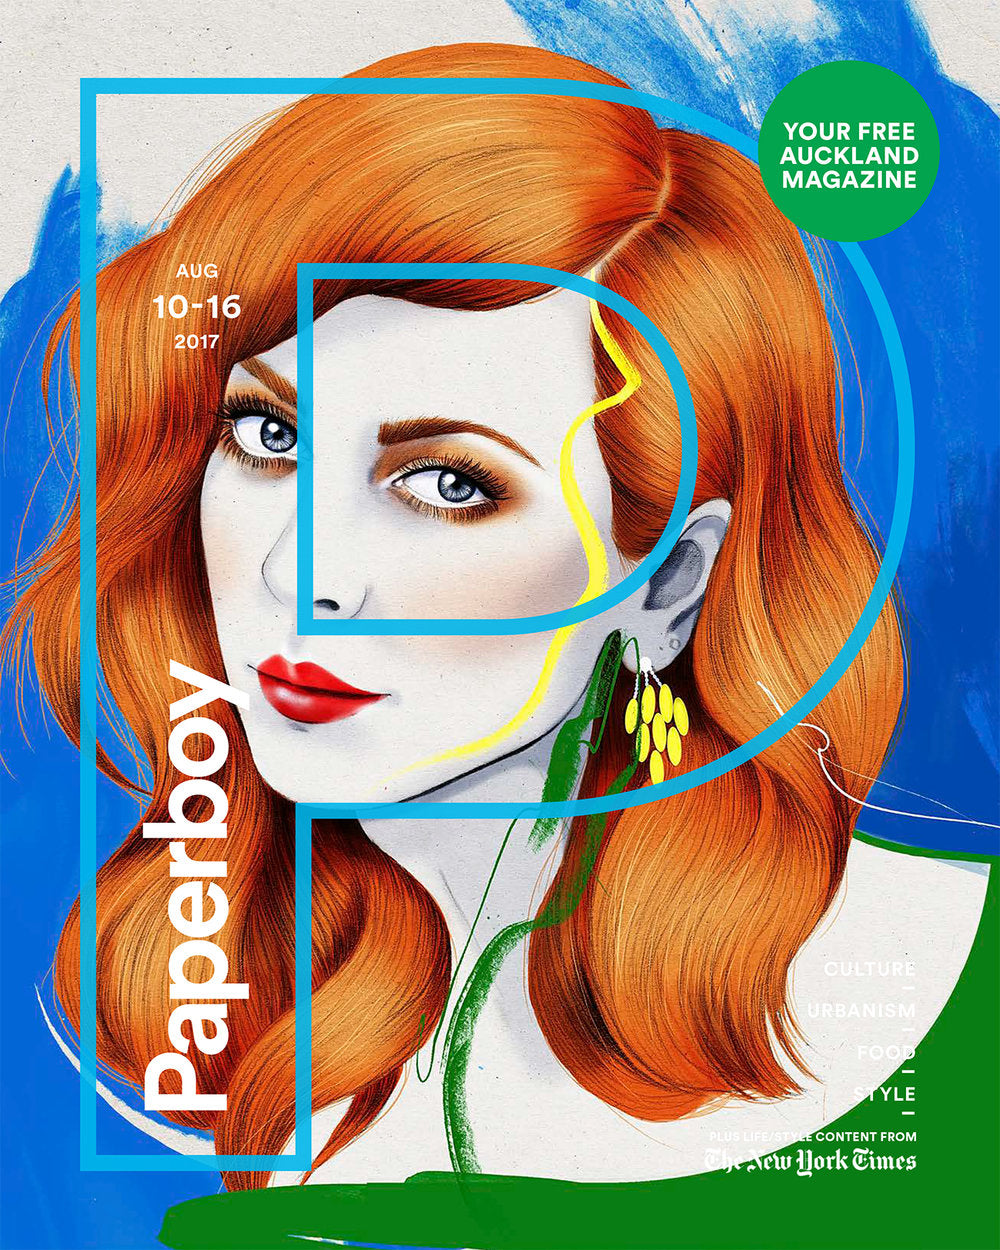 Self portrait Paperboy Magazine woman illustration by Melbourne based illustrator Kelly Thompson